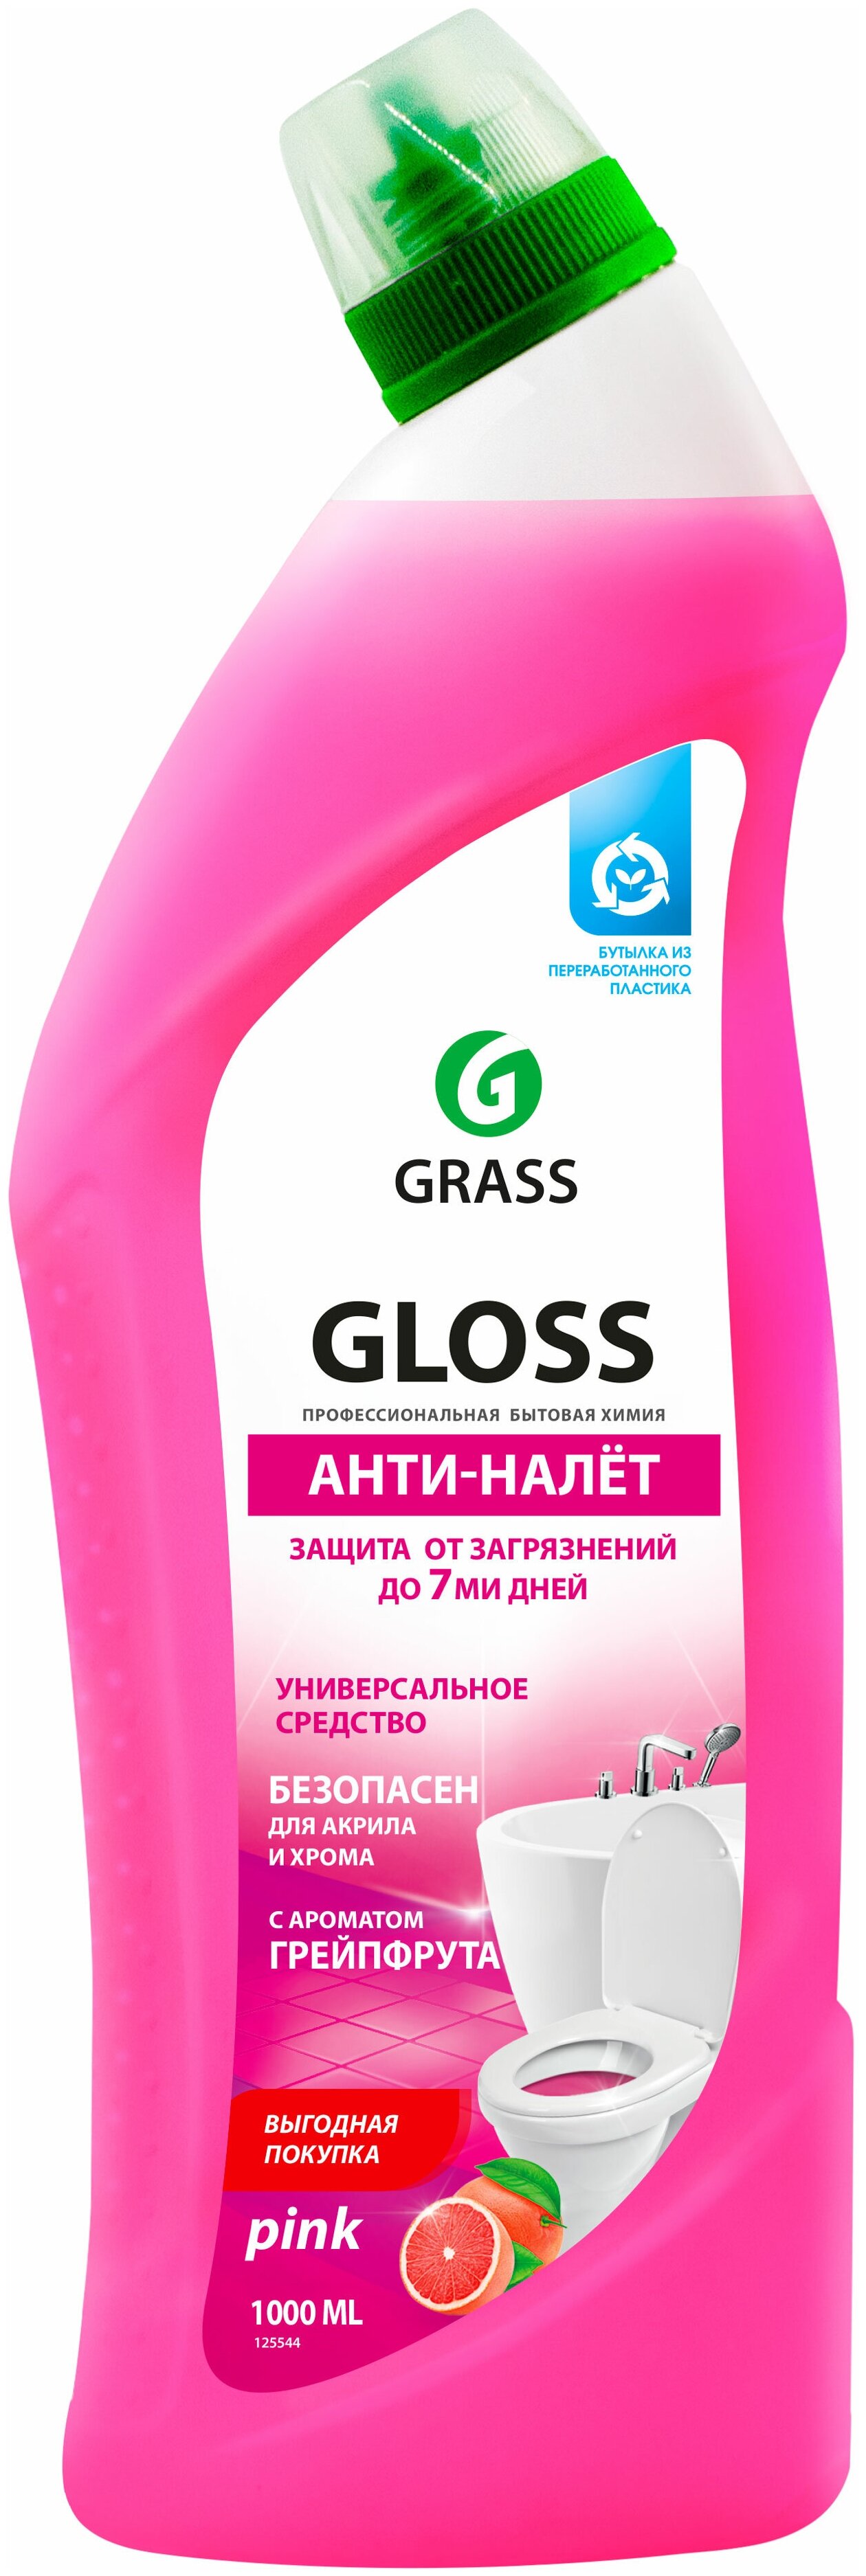 Grass Чистящий гель для ванны и туалета Gloss pink, 1 л.